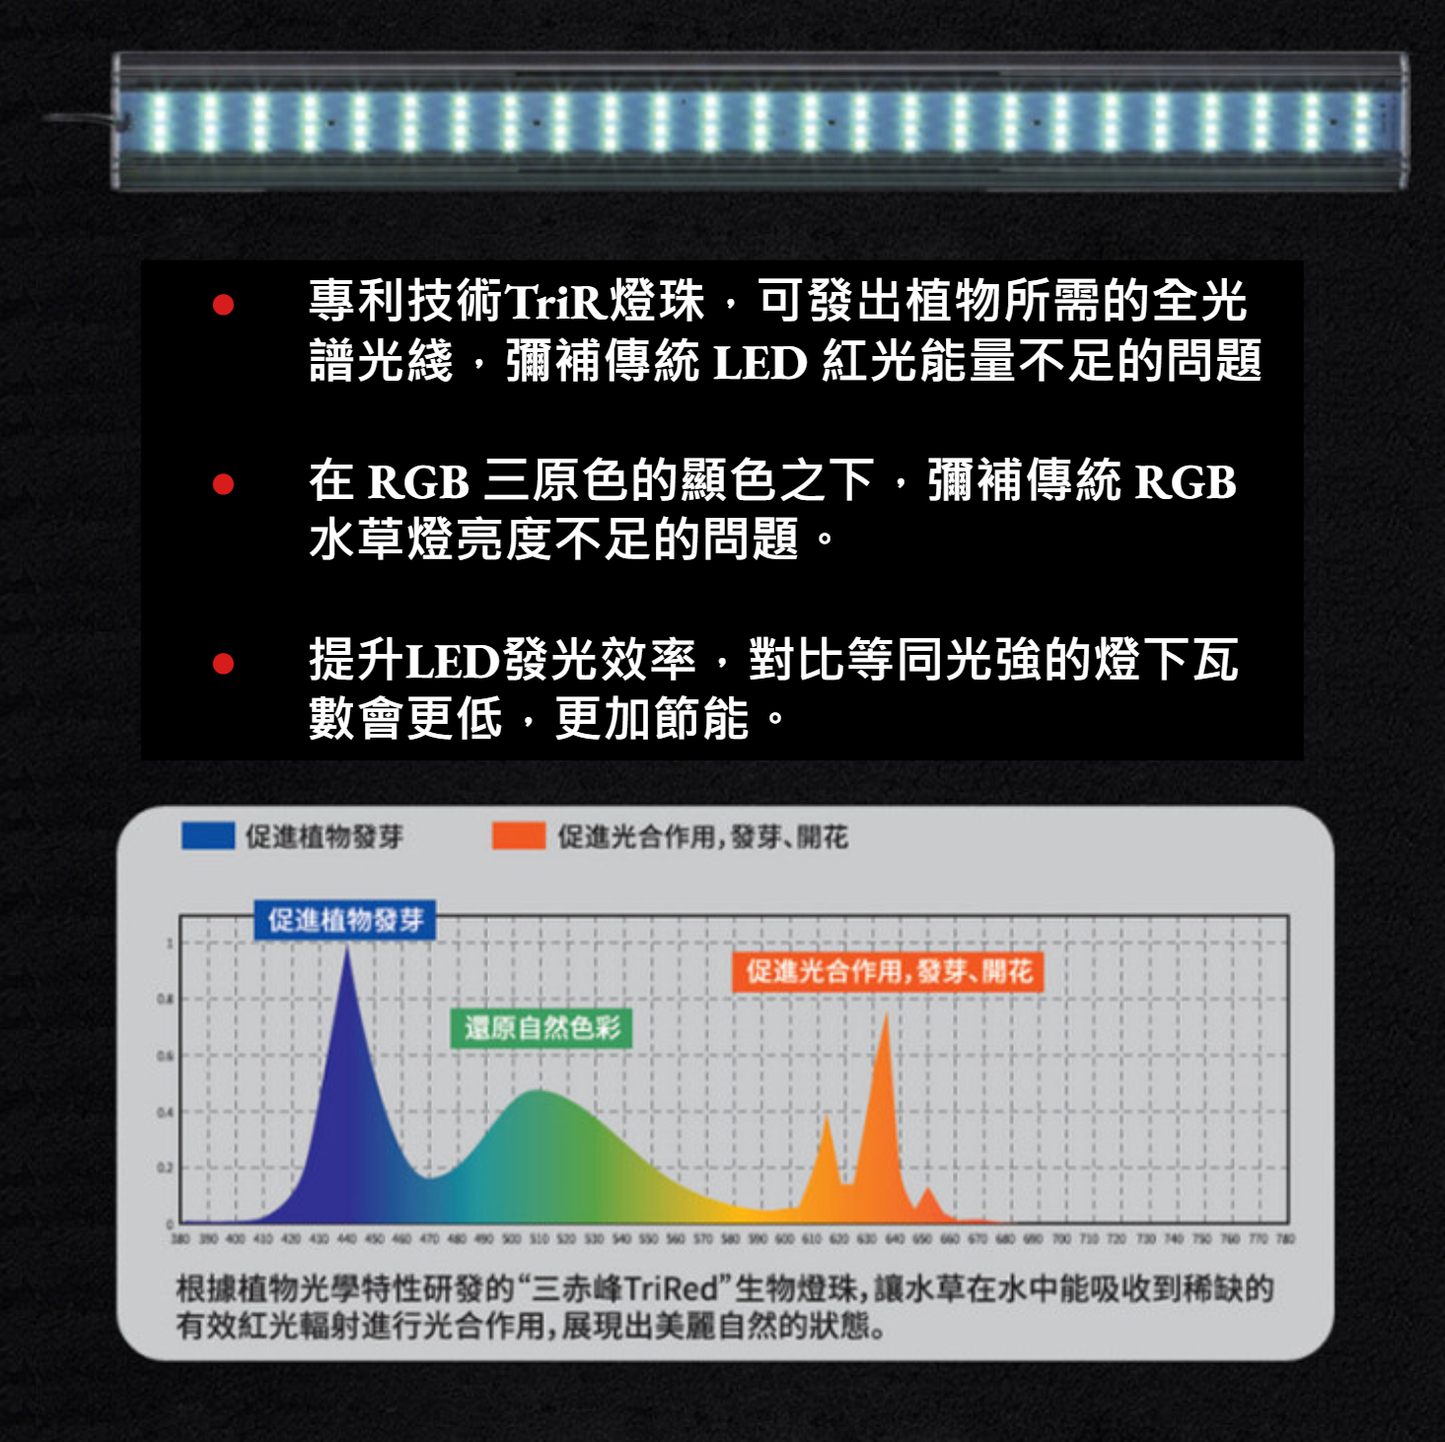 Neo-Helios RGB full spectrum professional LED light